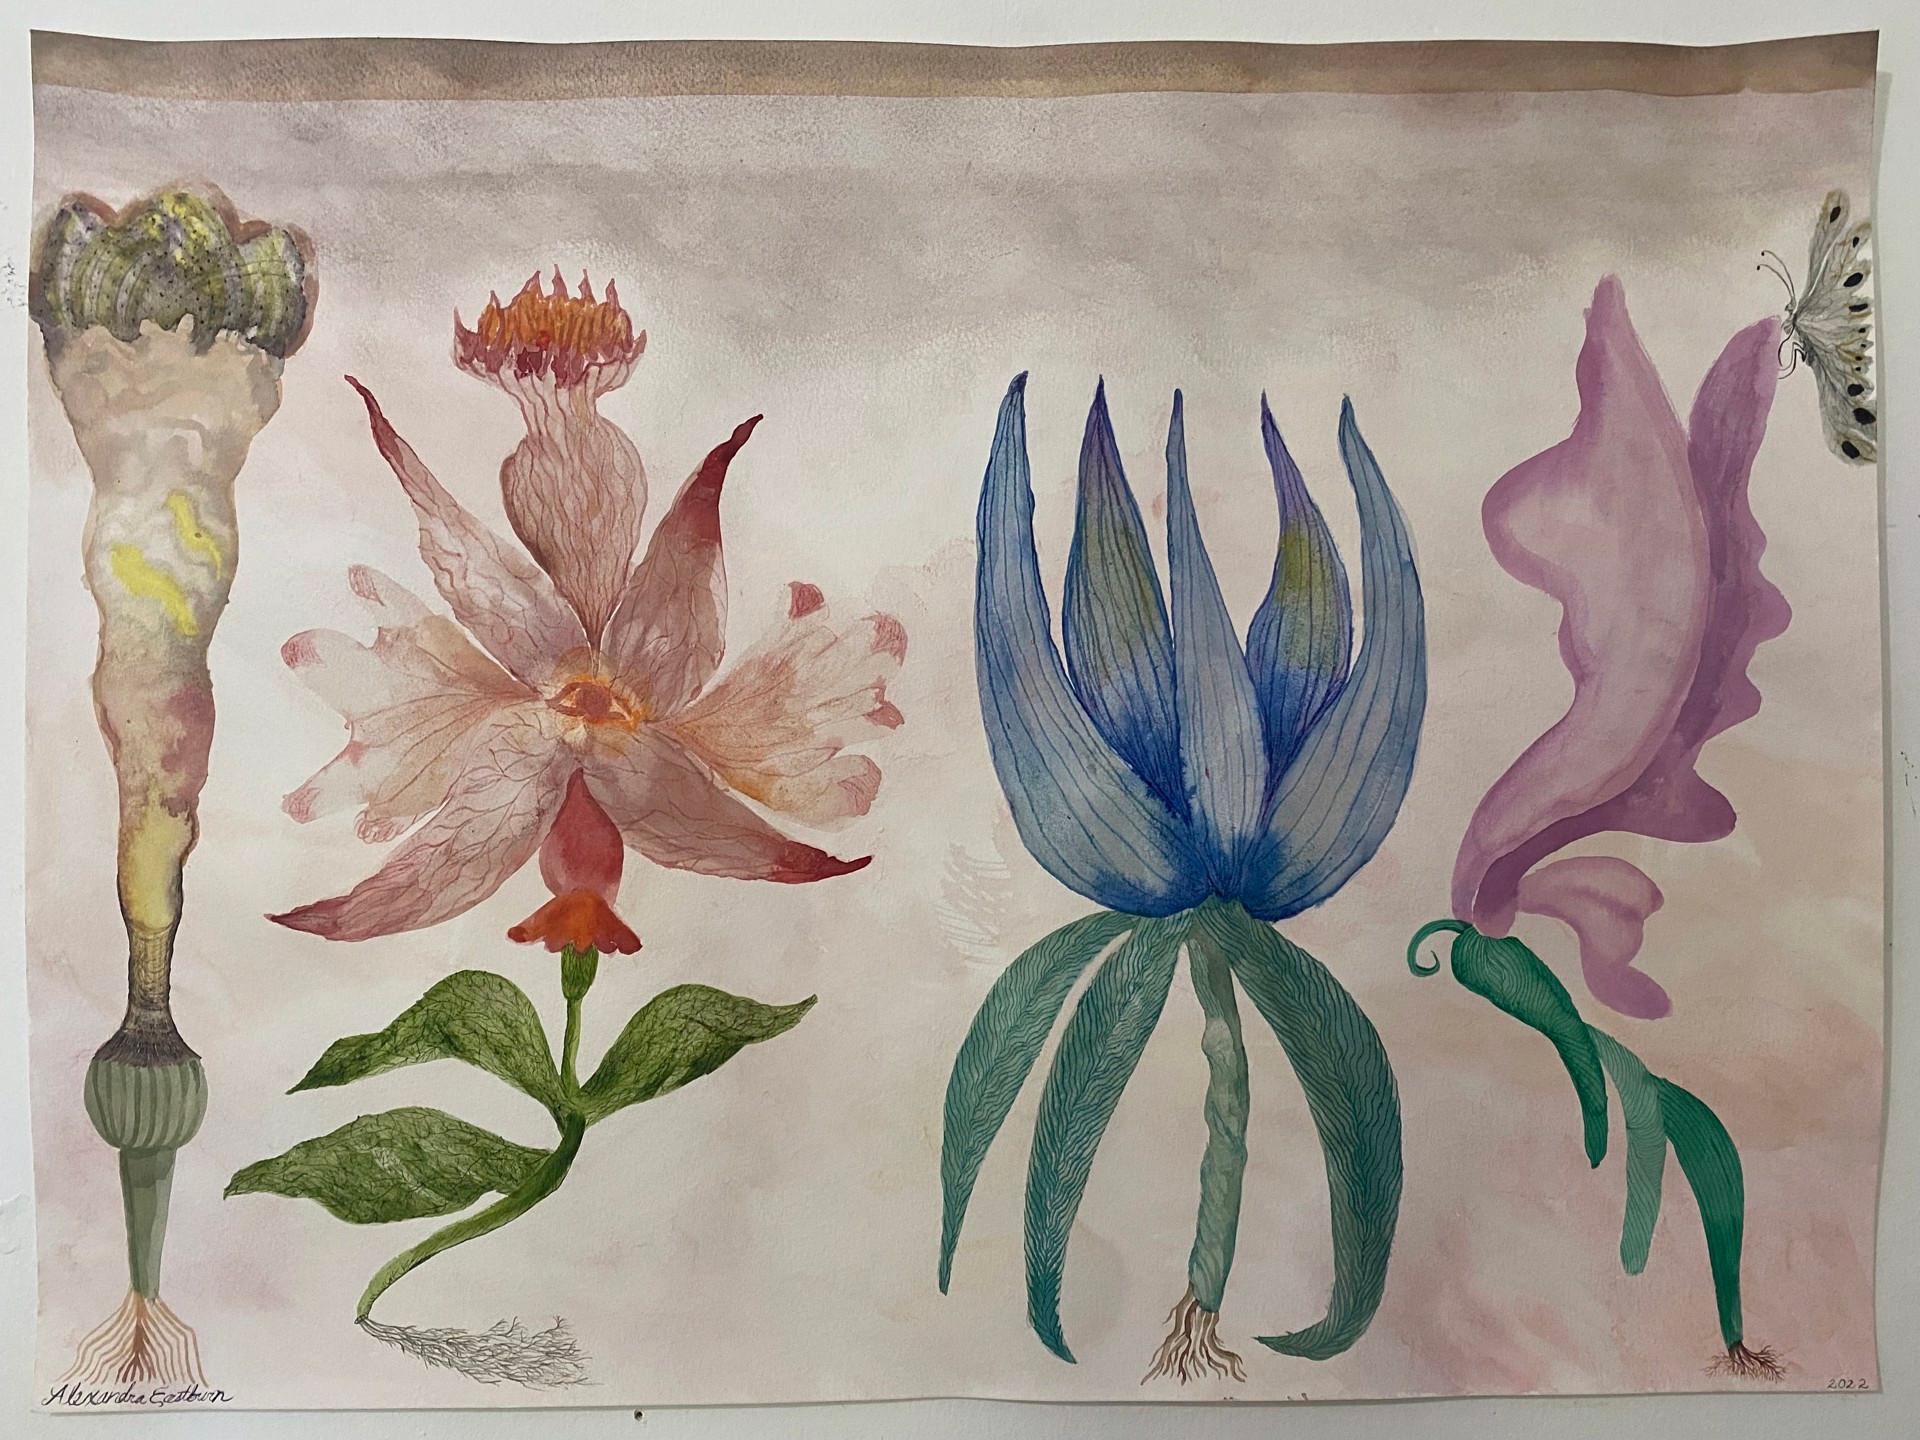 Alexandra Eastburn Landscape Art - Awake in a Dream, botanicals, florals, nature, watercolor painting, pink & blue